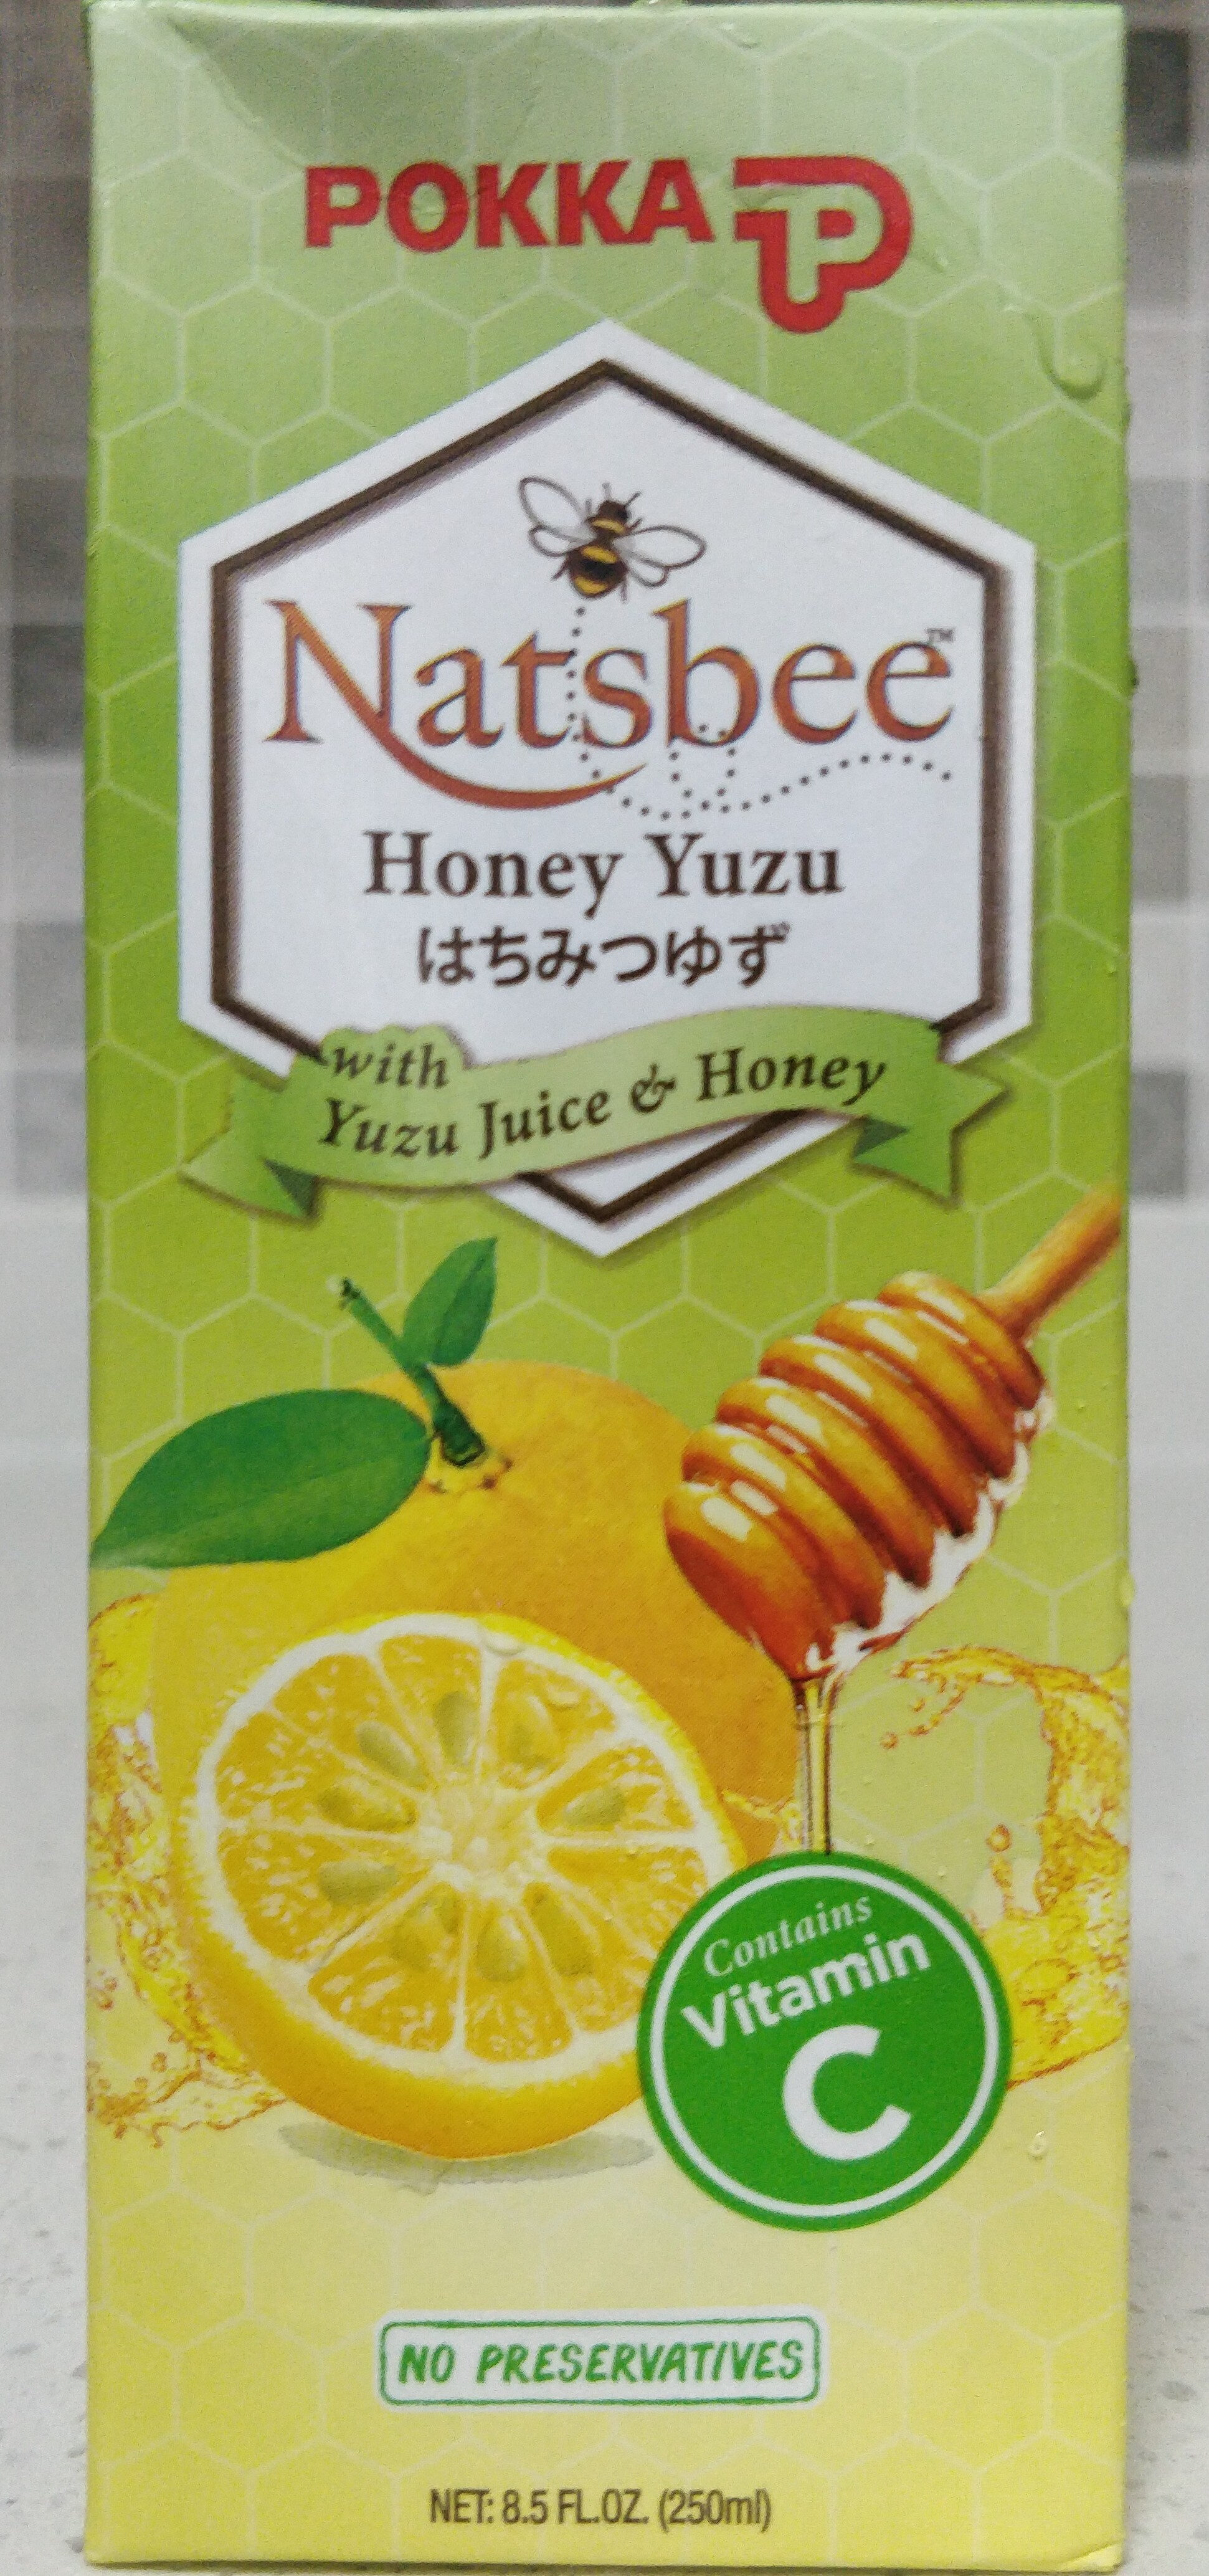 Natsbee Honey Yuzu - Product - en